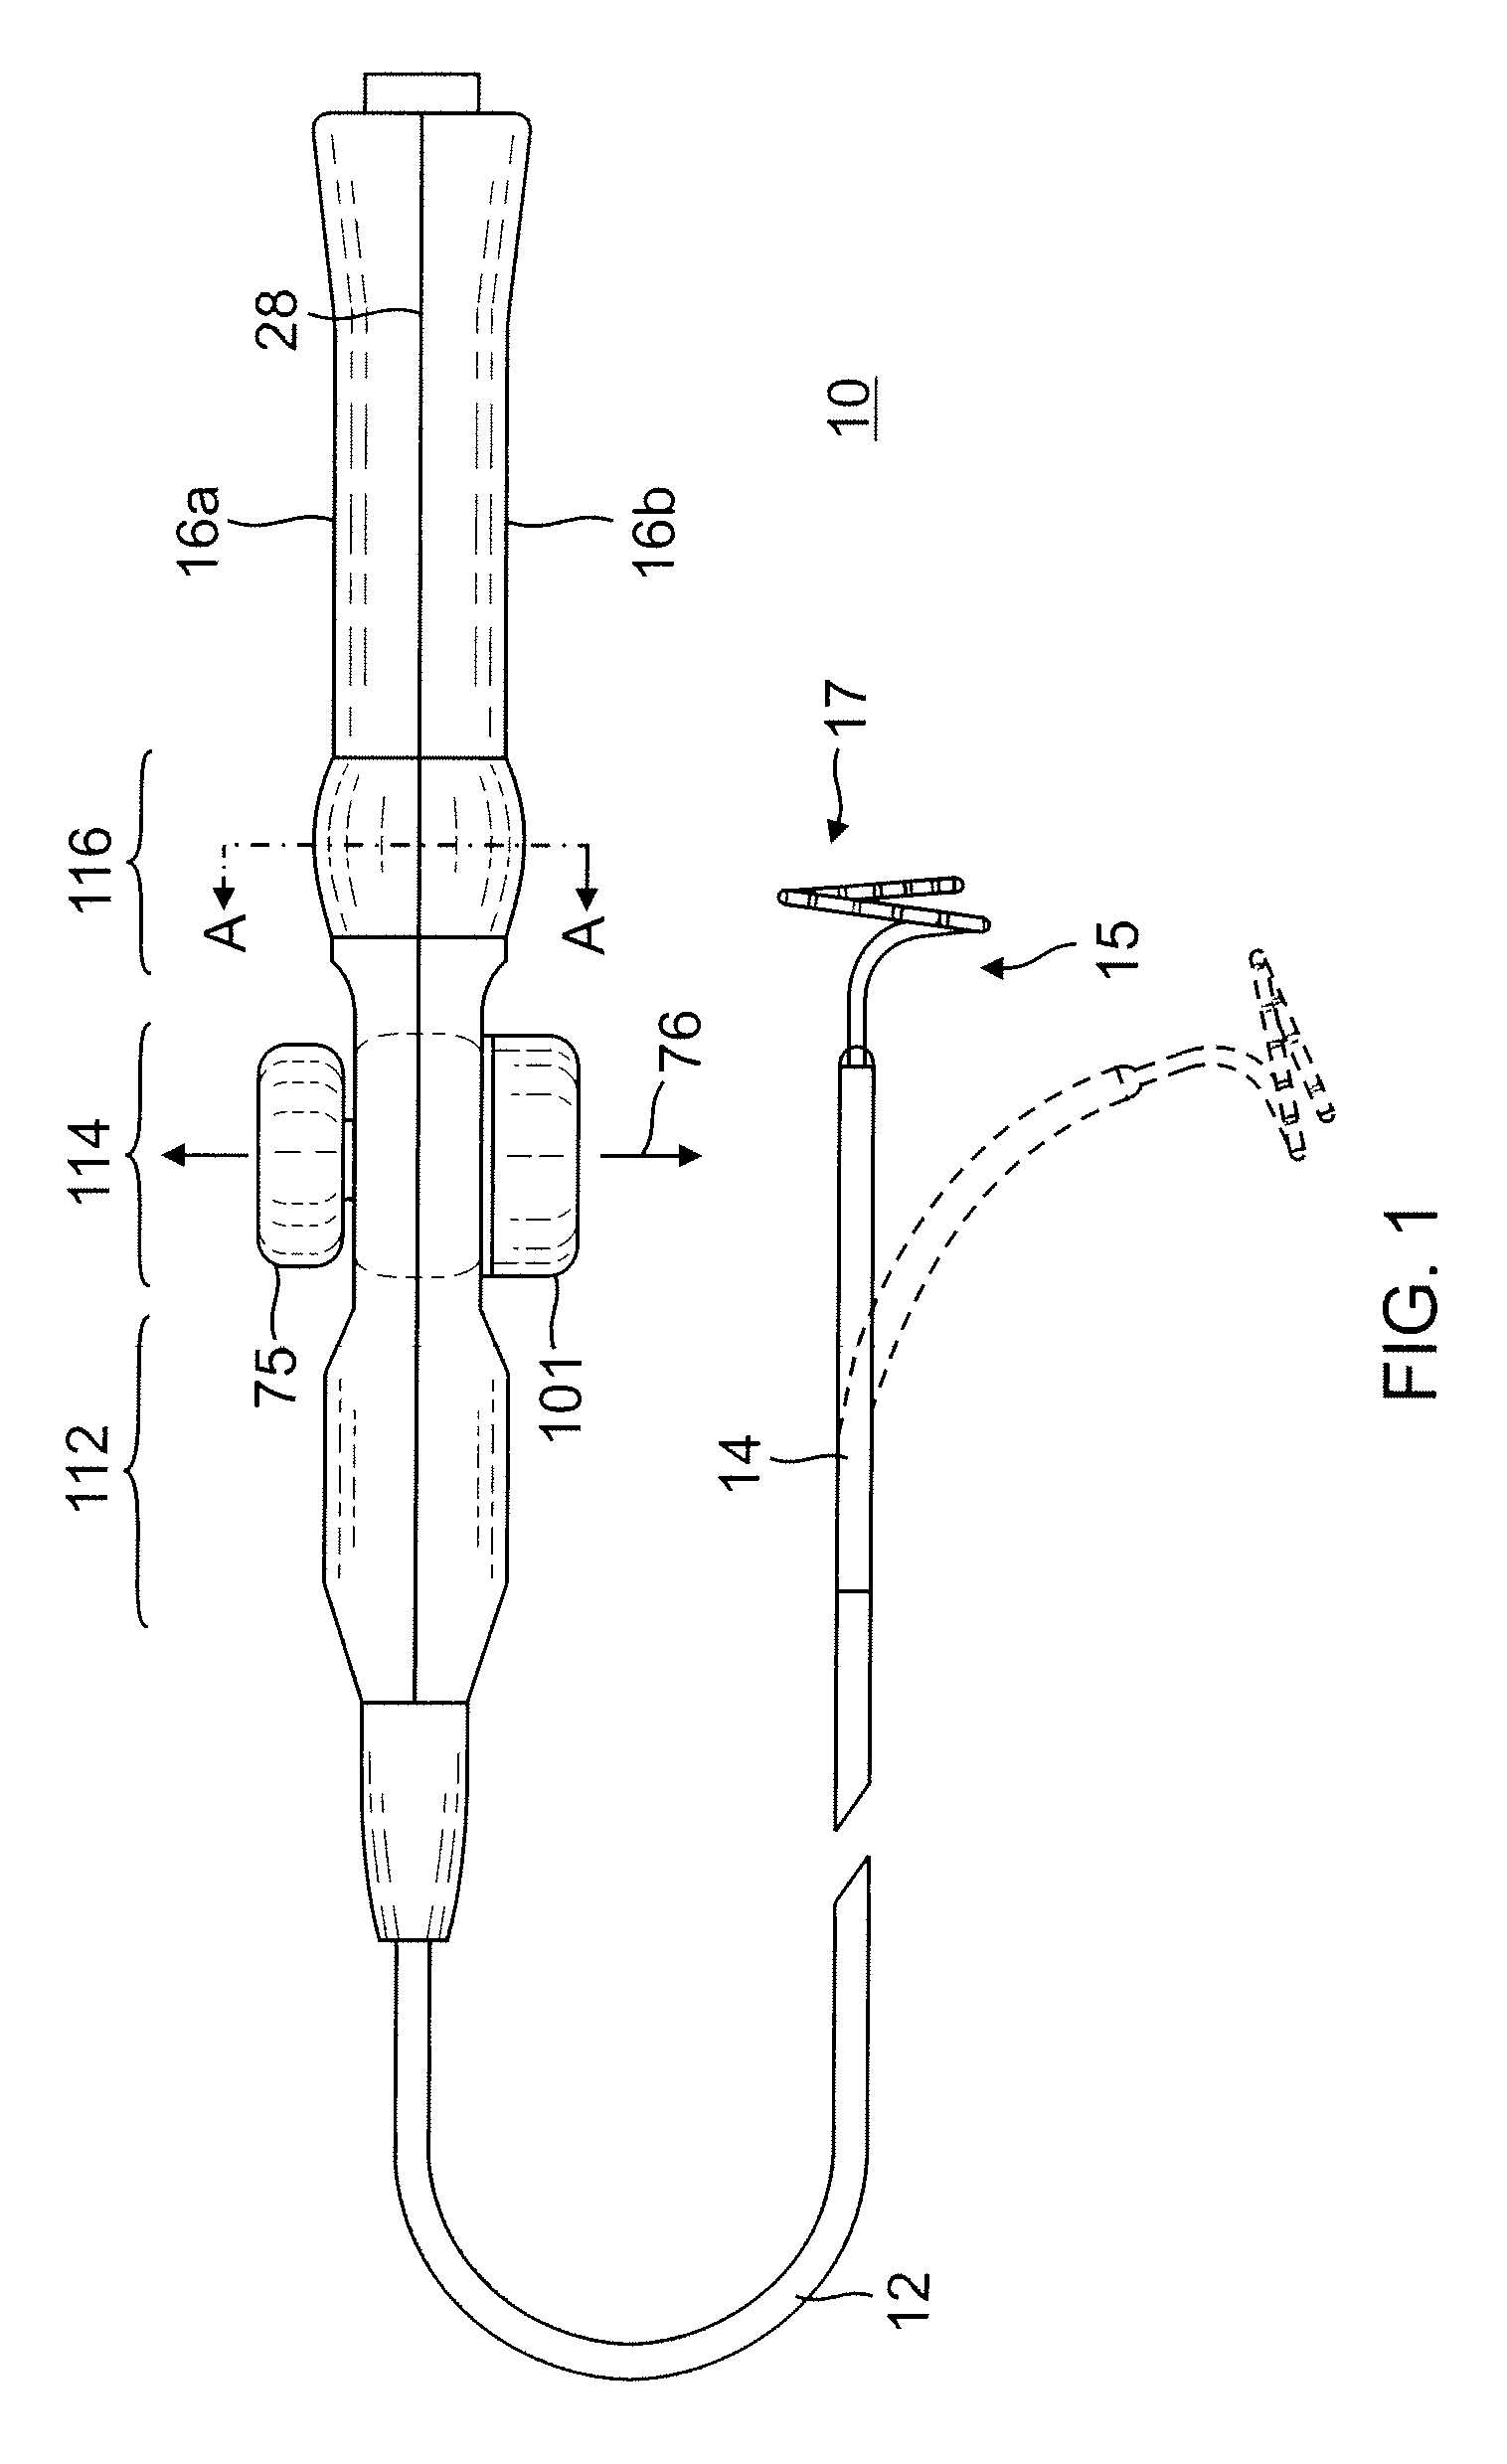 Catheter with multi-functional control handle having rotational mechanism